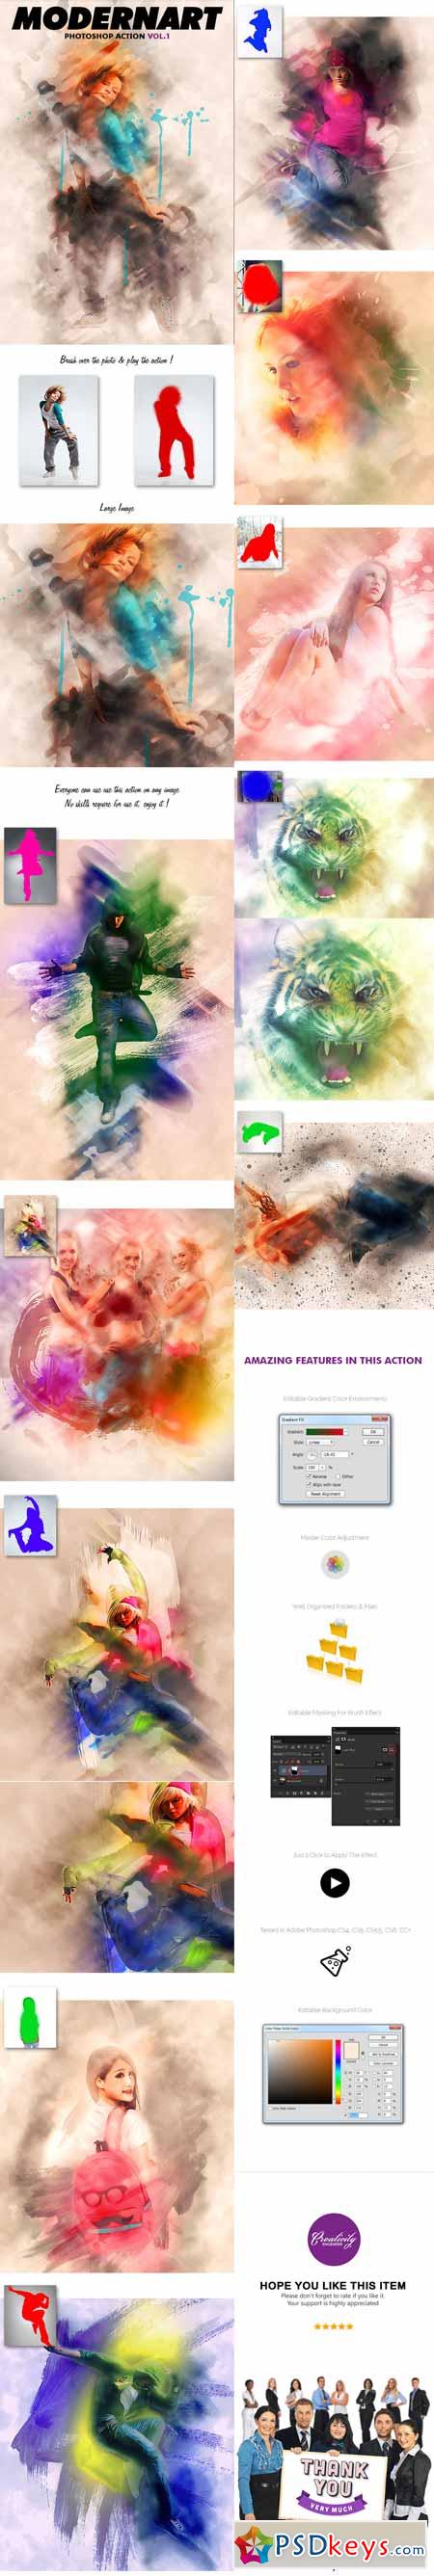 ModernArt Vol.1 - Photoshop Action 11470839